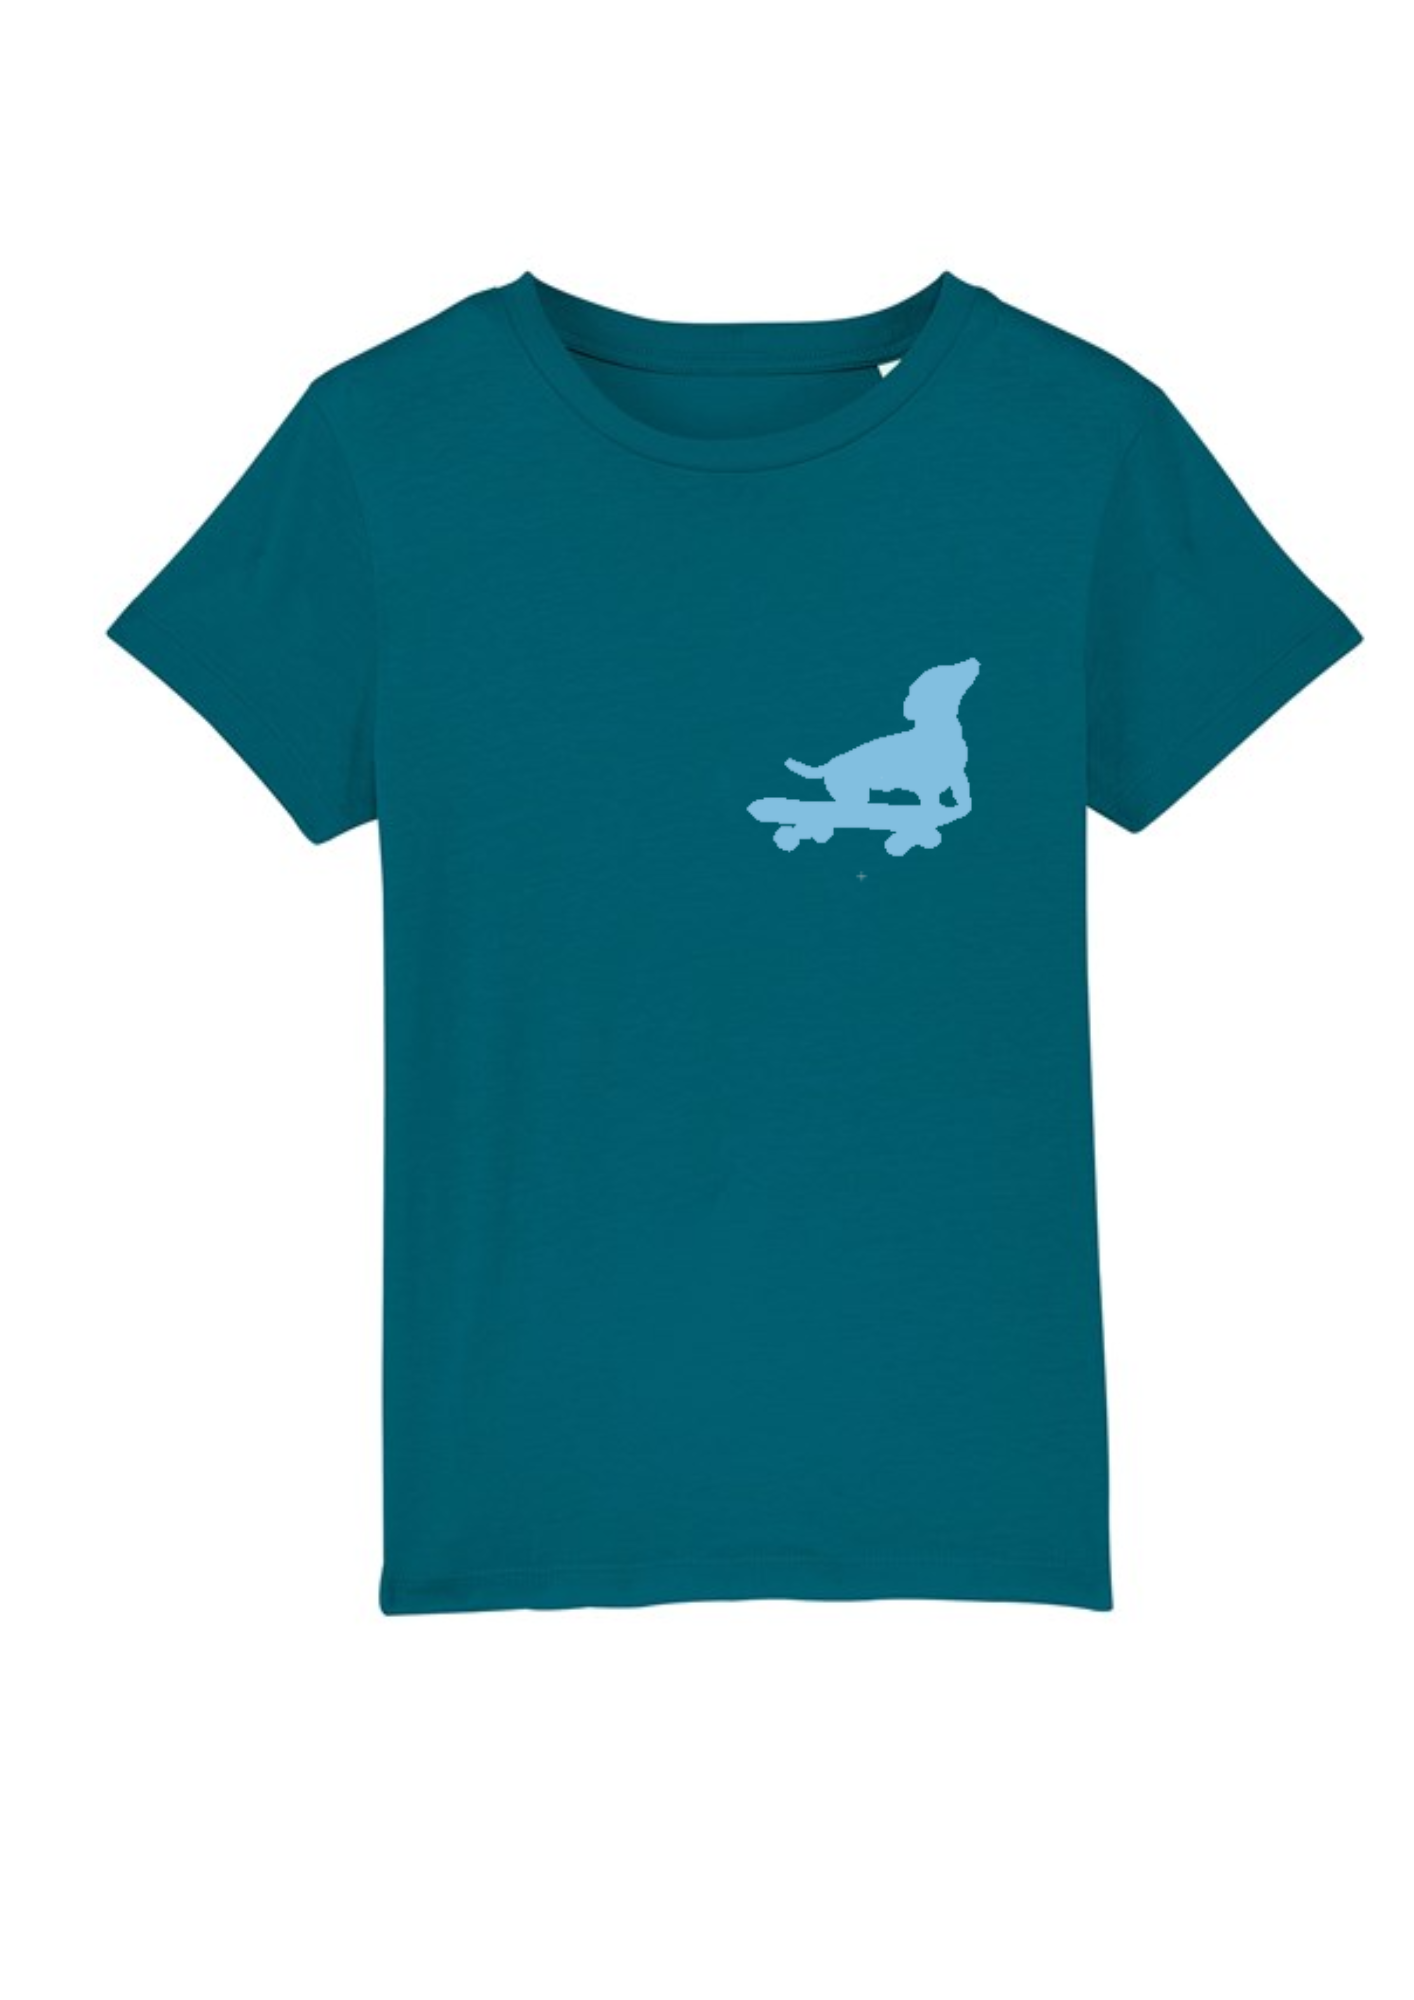 Small Dog on Skateboard T shirt // Ocean Hues